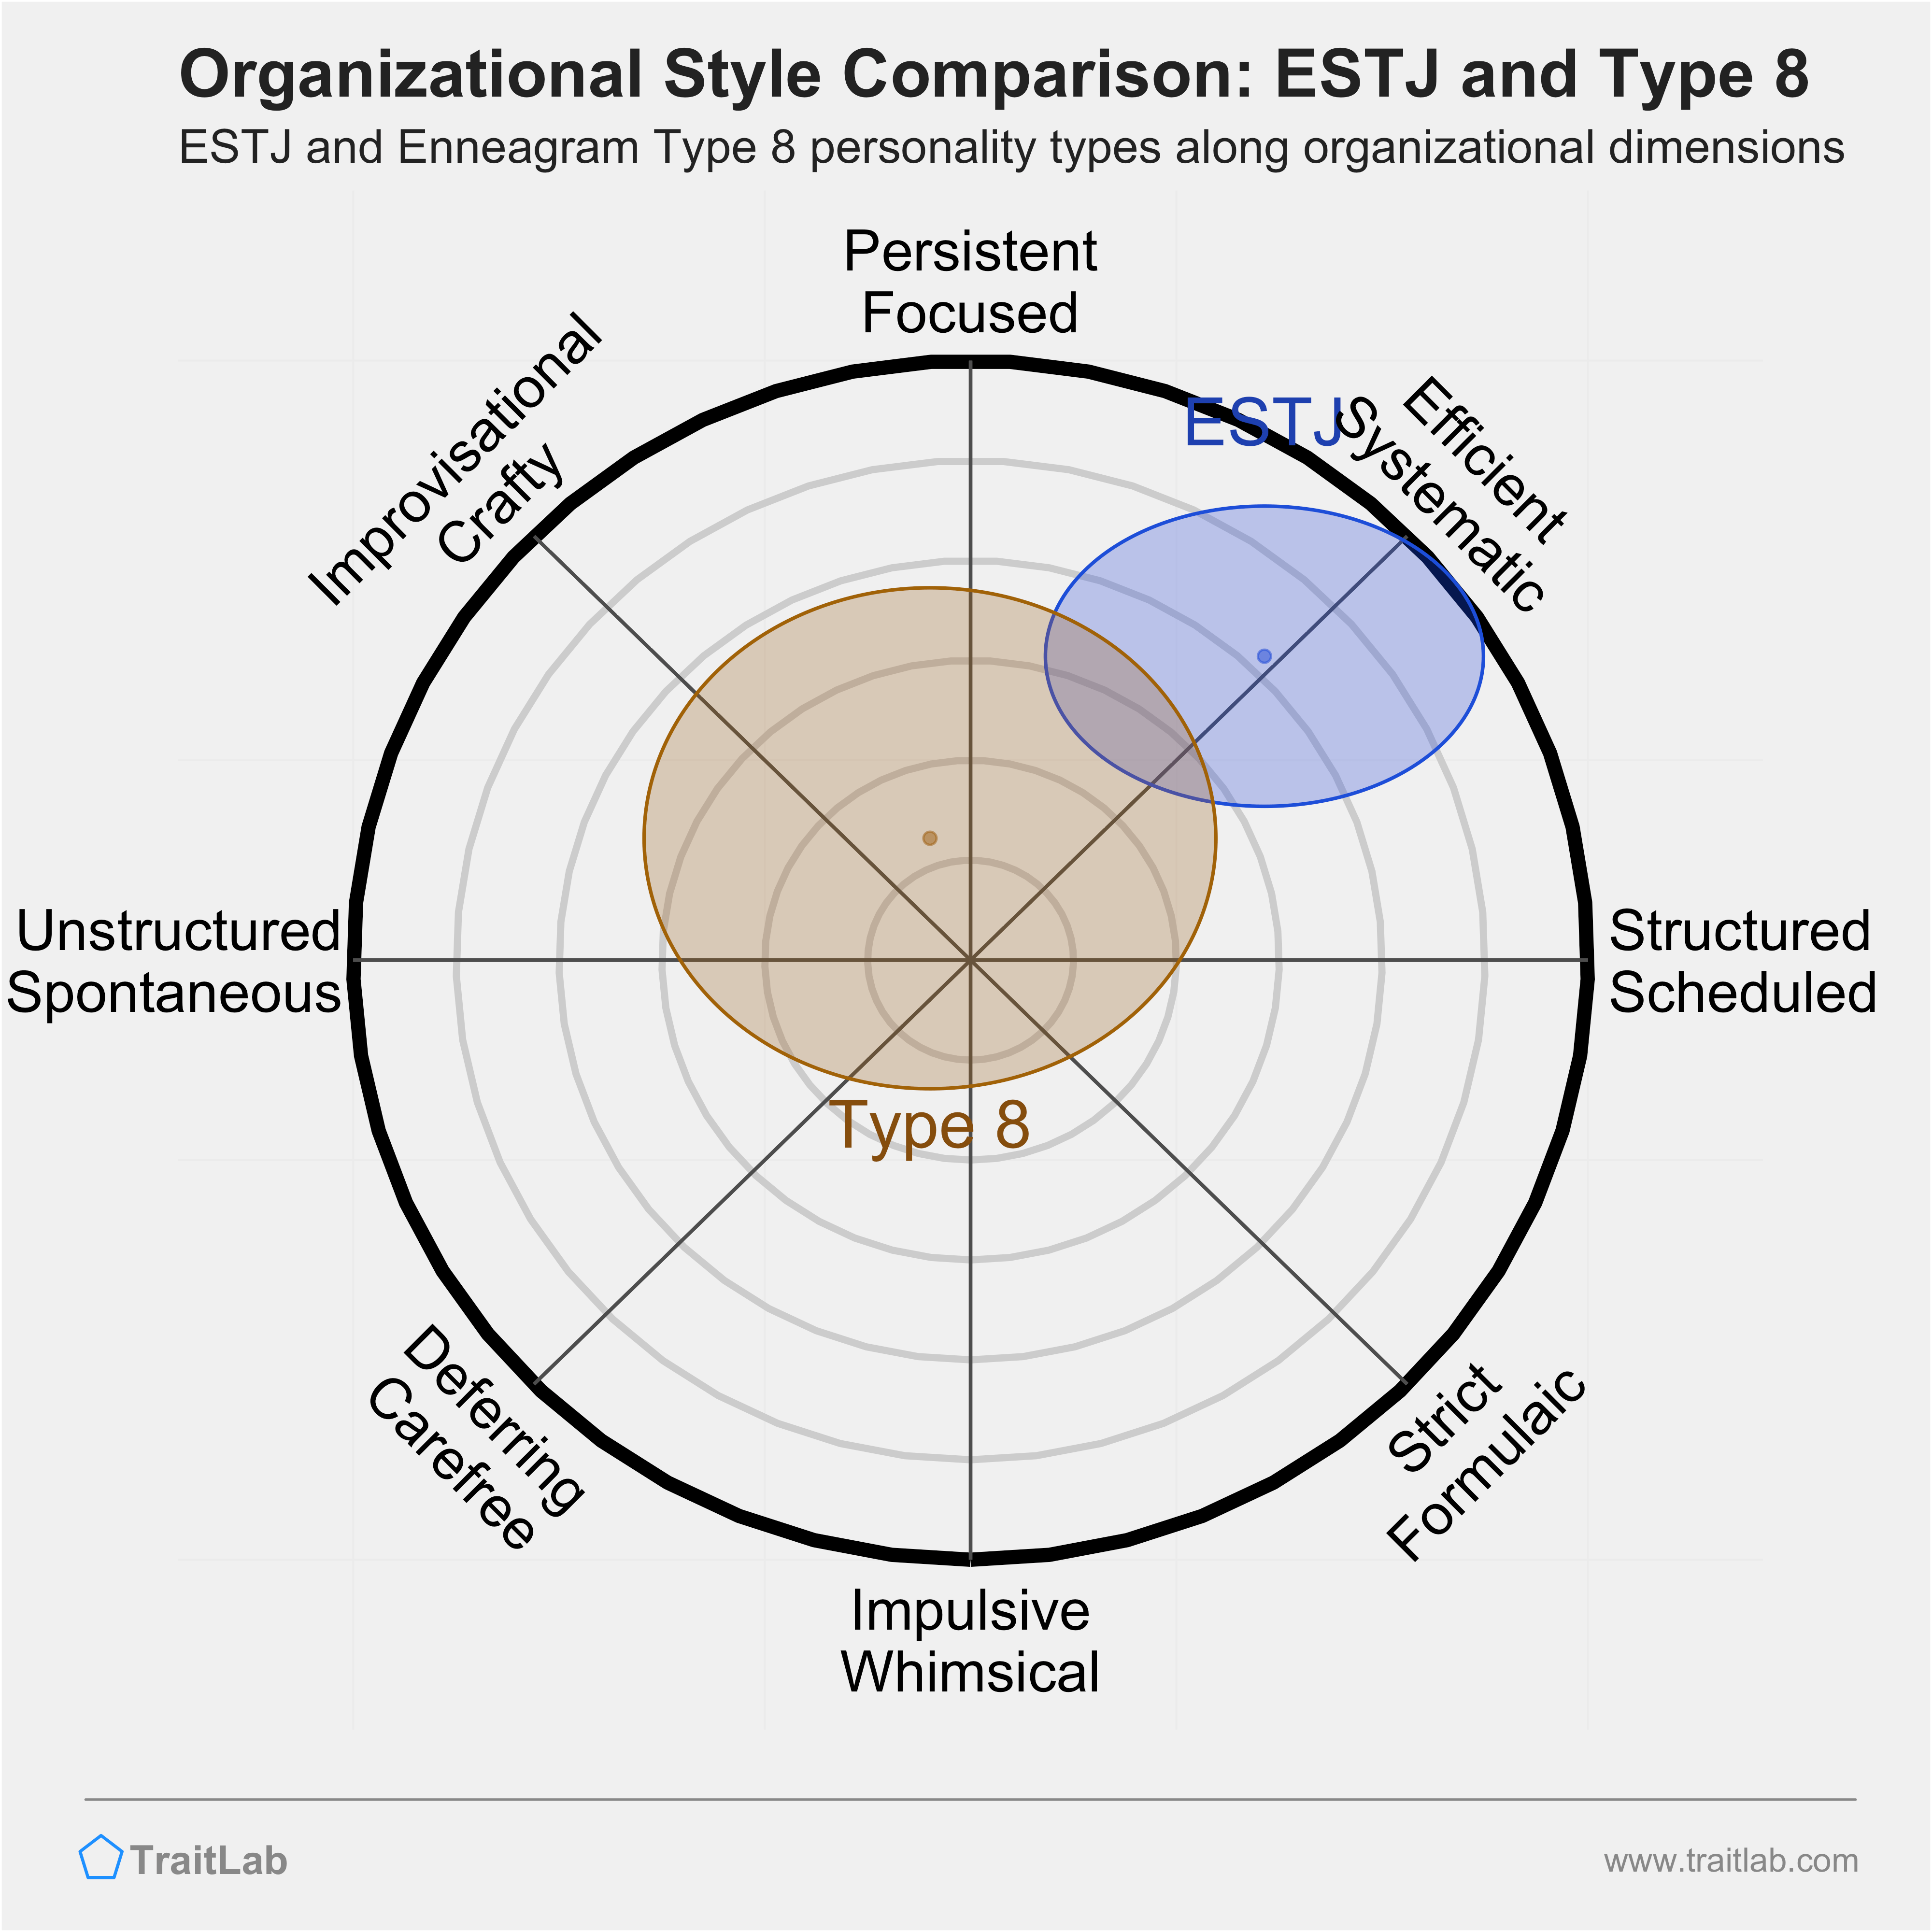 ESTJ and Type 8 comparison across organizational dimensions